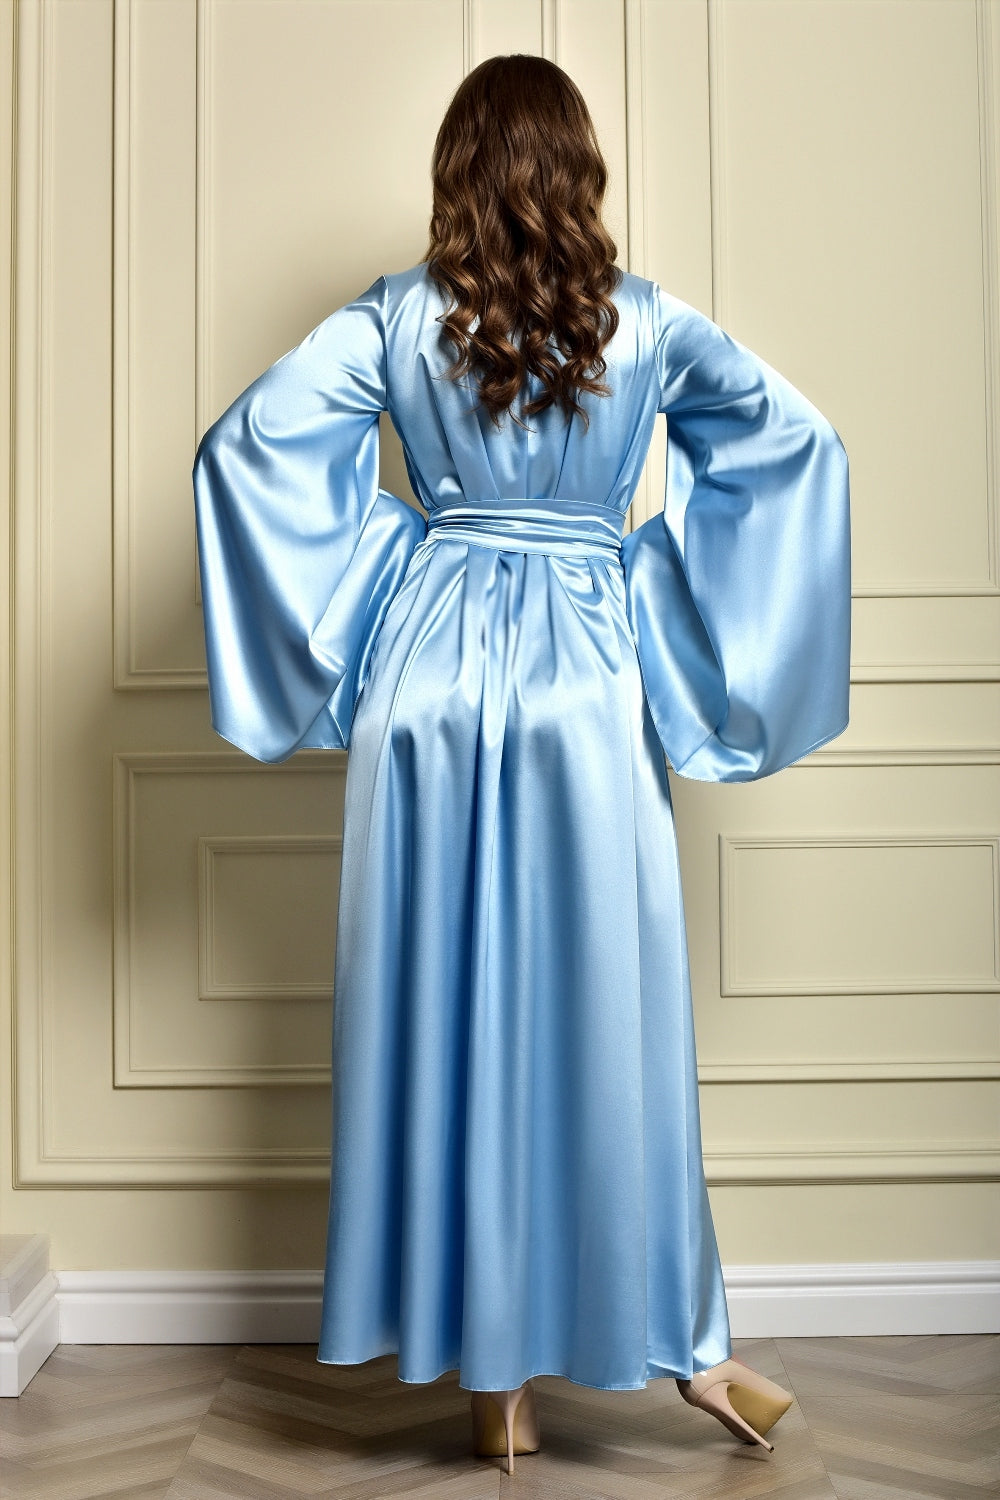 Elegant Bridesmaid Robe in Sky Blue - Back View